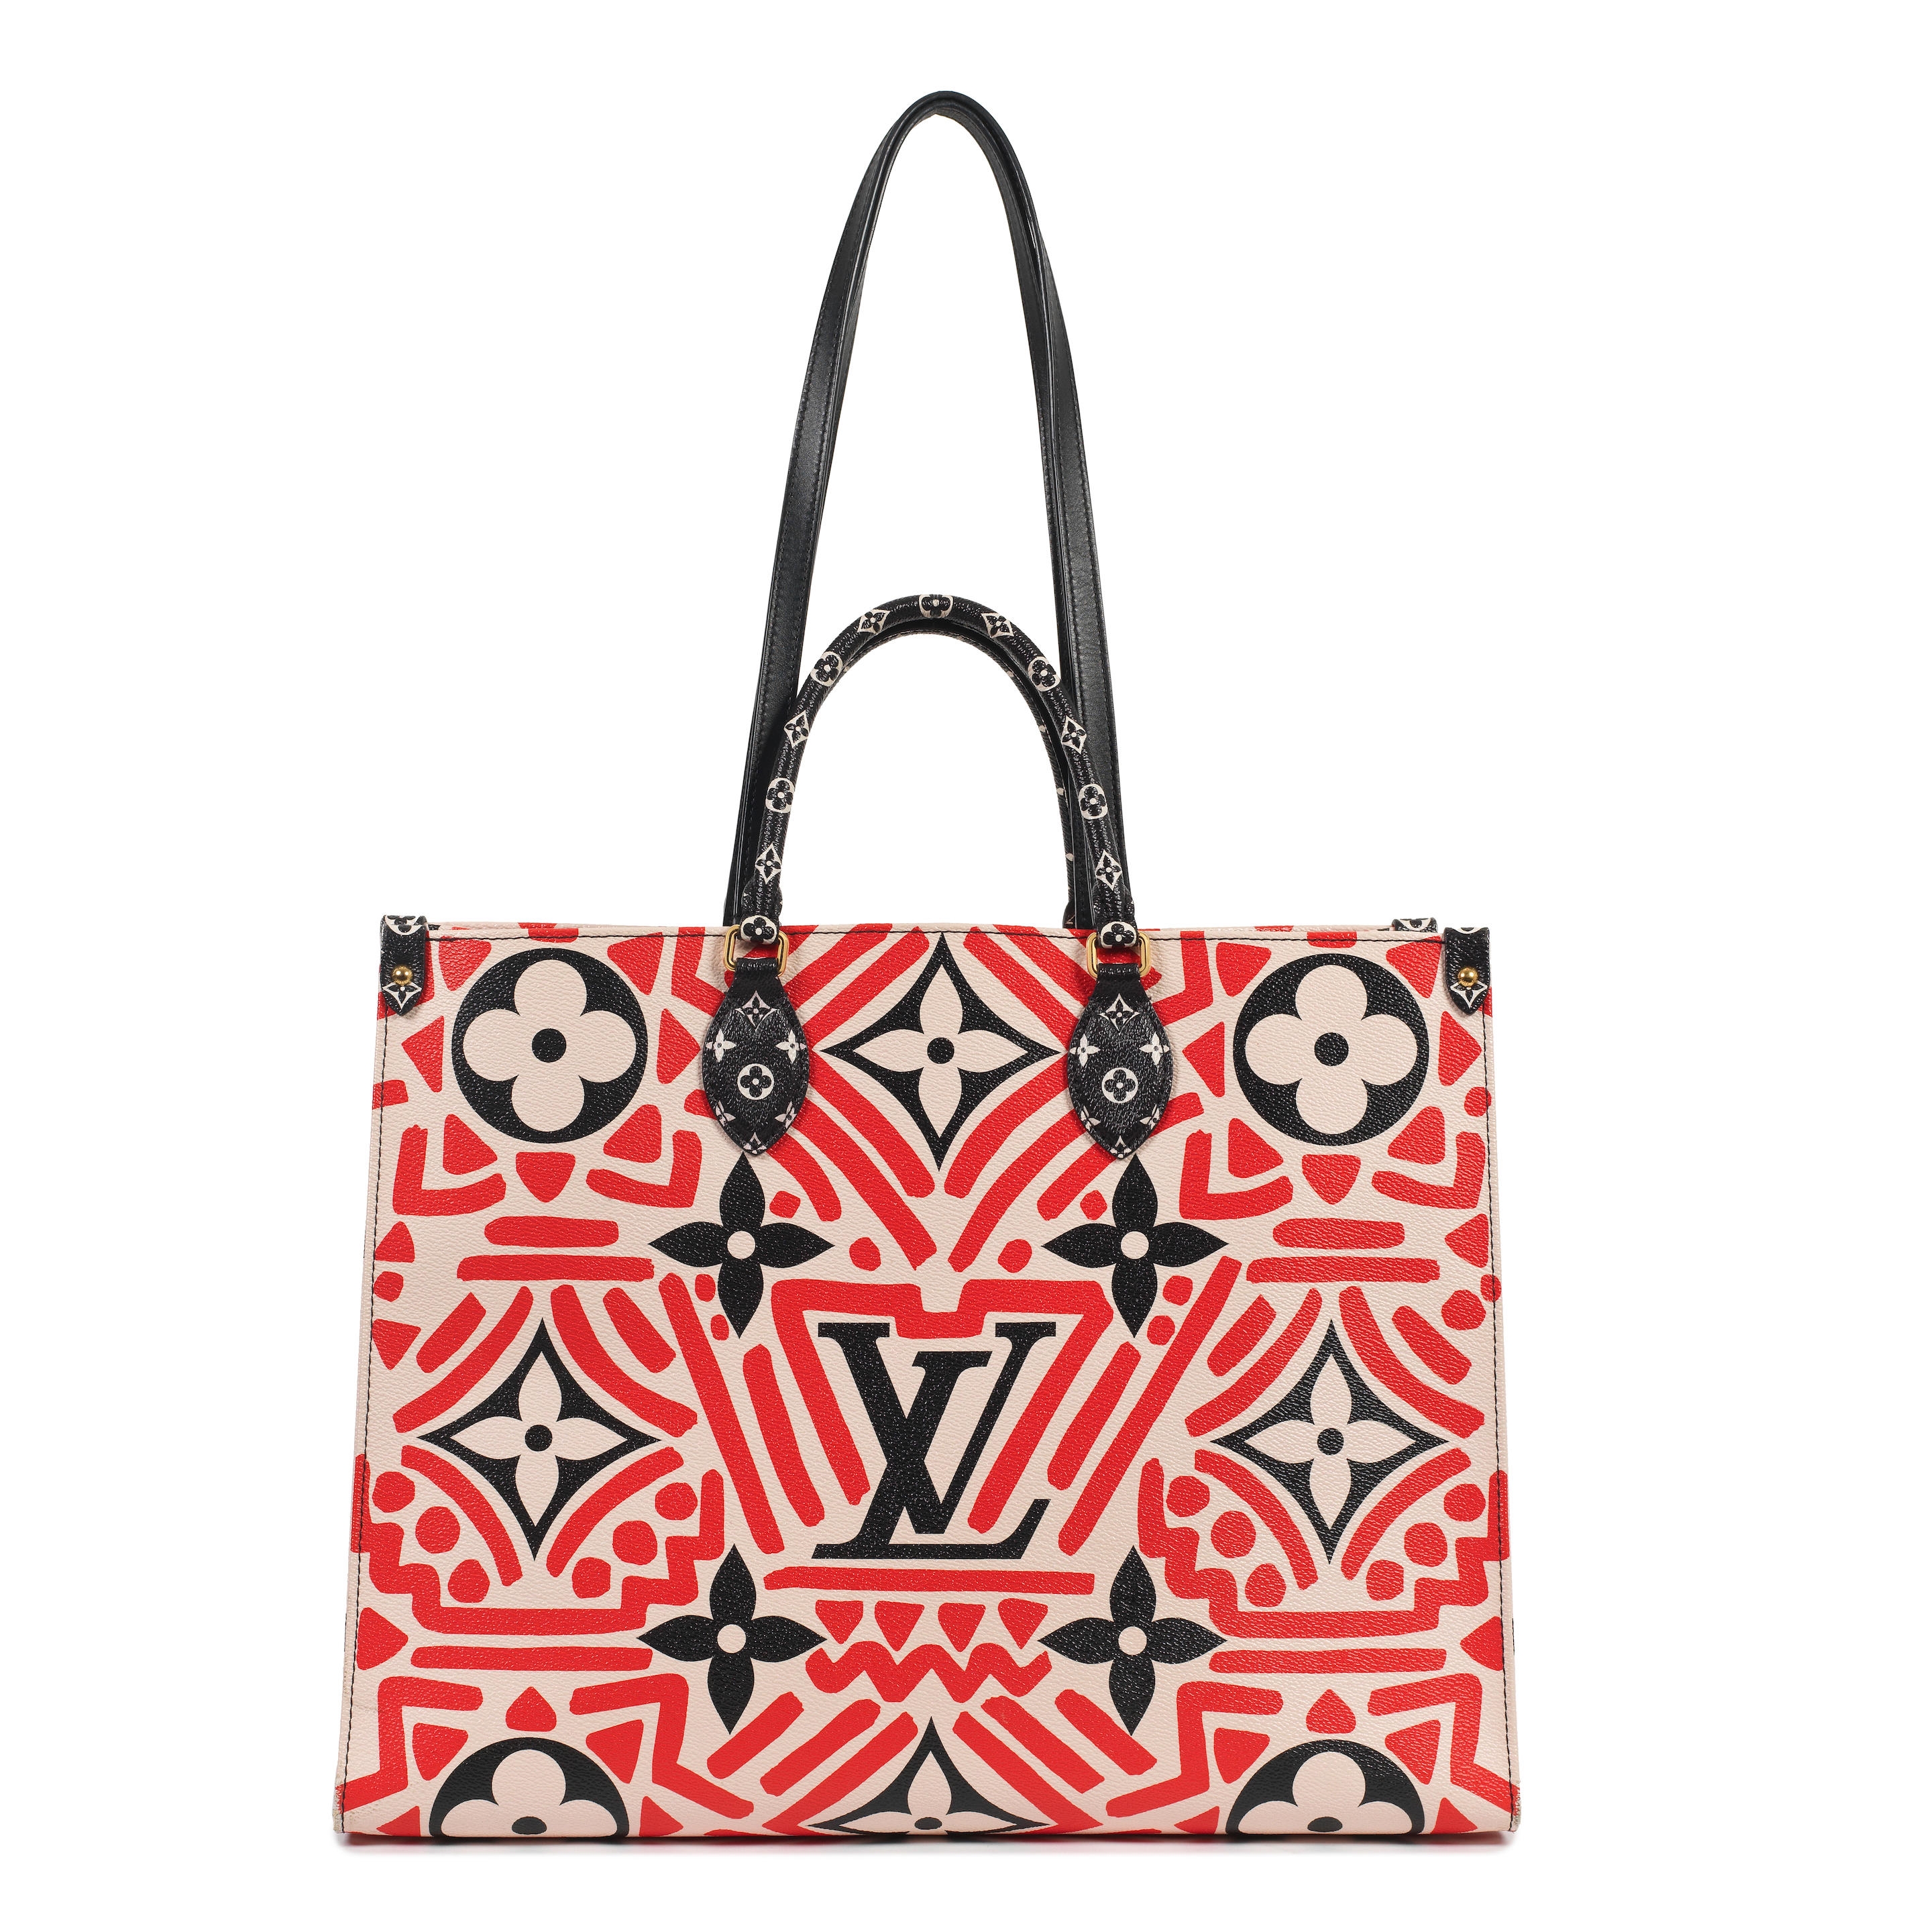 Bonhams : Louis Vuitton A Denim Sac a Dos Backpack, 2007 (includes